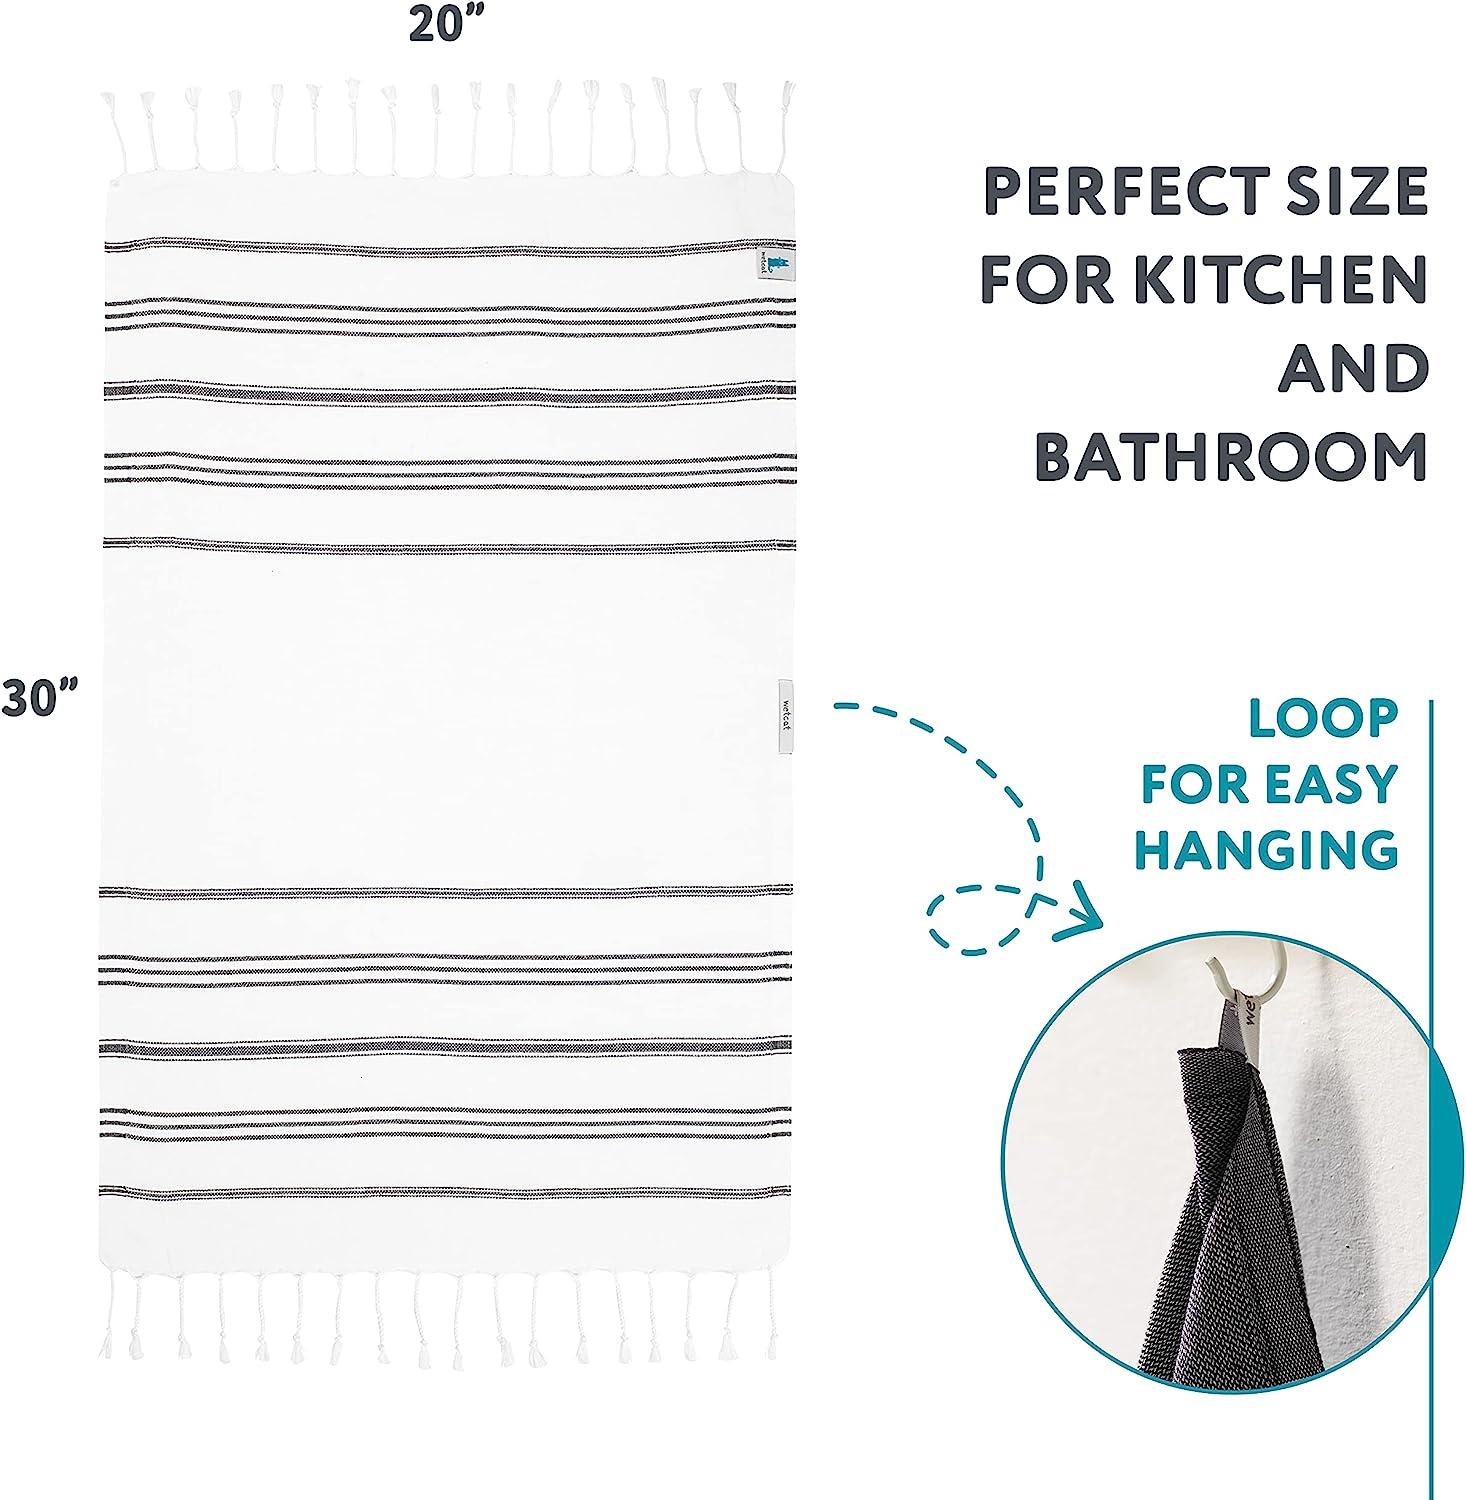 WETCAT Turkish Hand Towels with Hanging Loop (20 x 30) - Set of 2